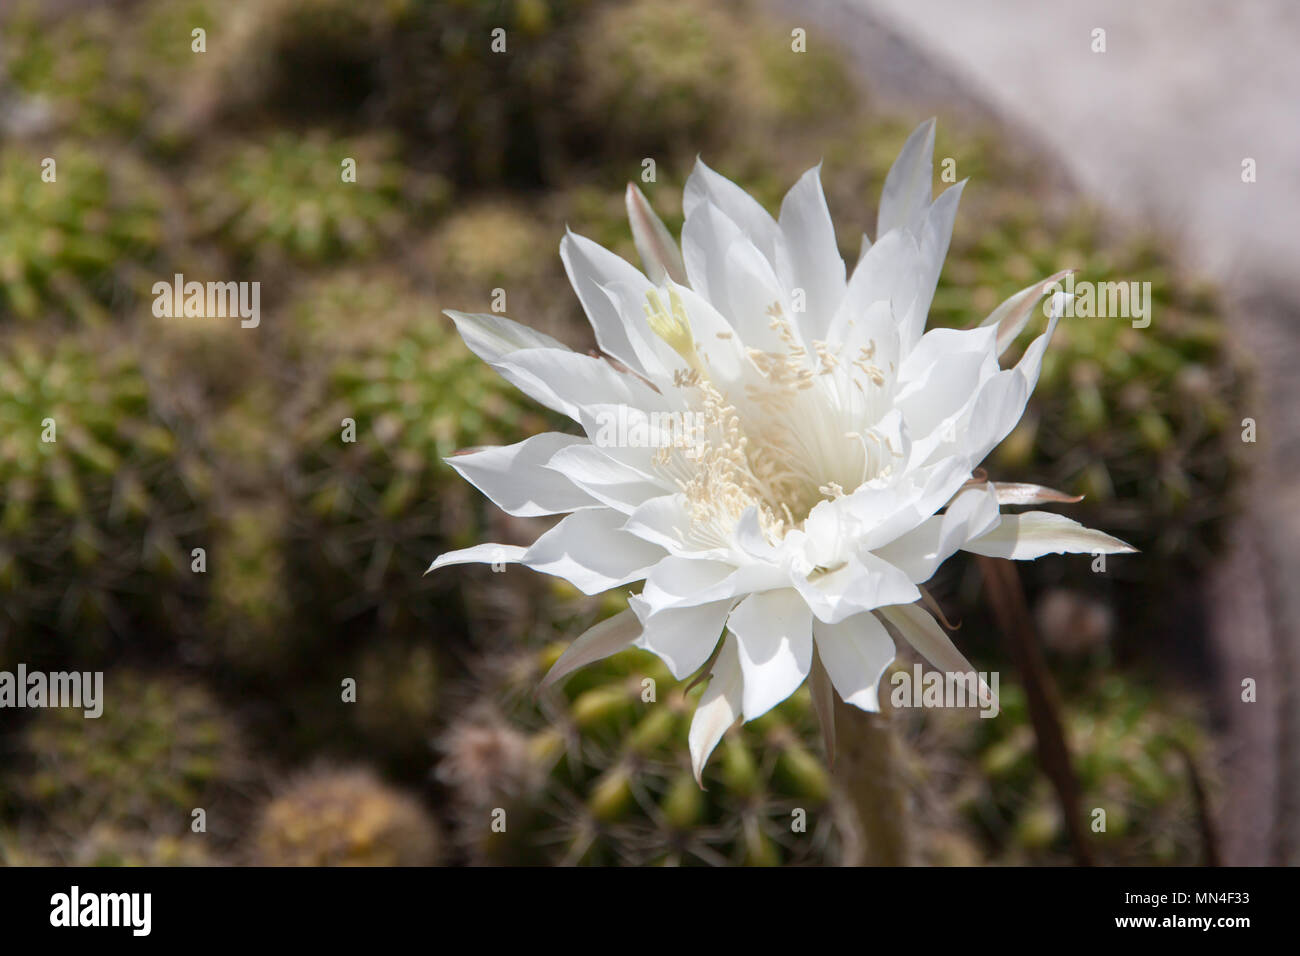 White cactus flower closeup under morning sun light. Nature background Stock Photo